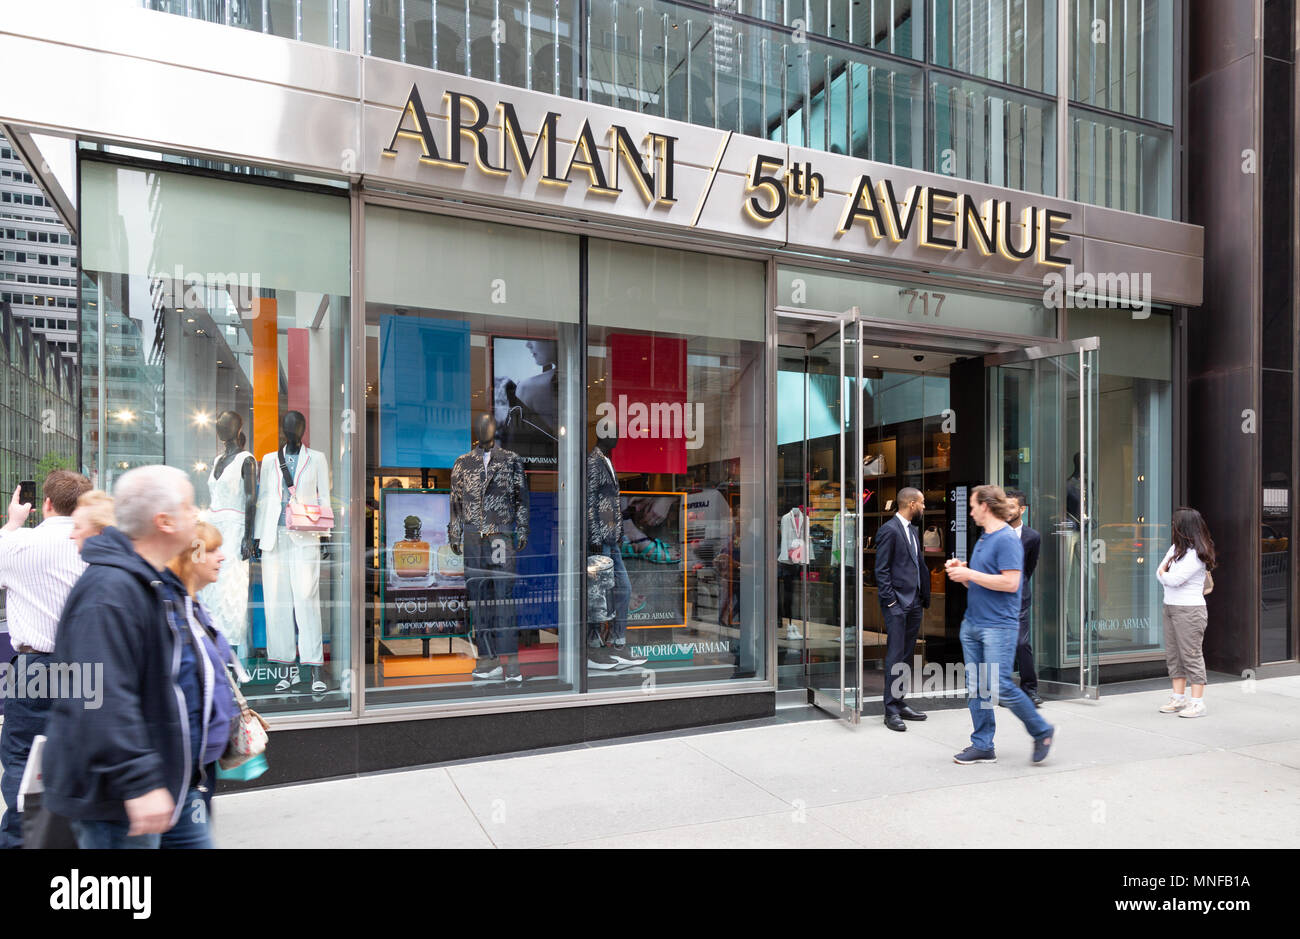 The Armani store, 5th Avenue, New York city USA Stock Photo - Alamy